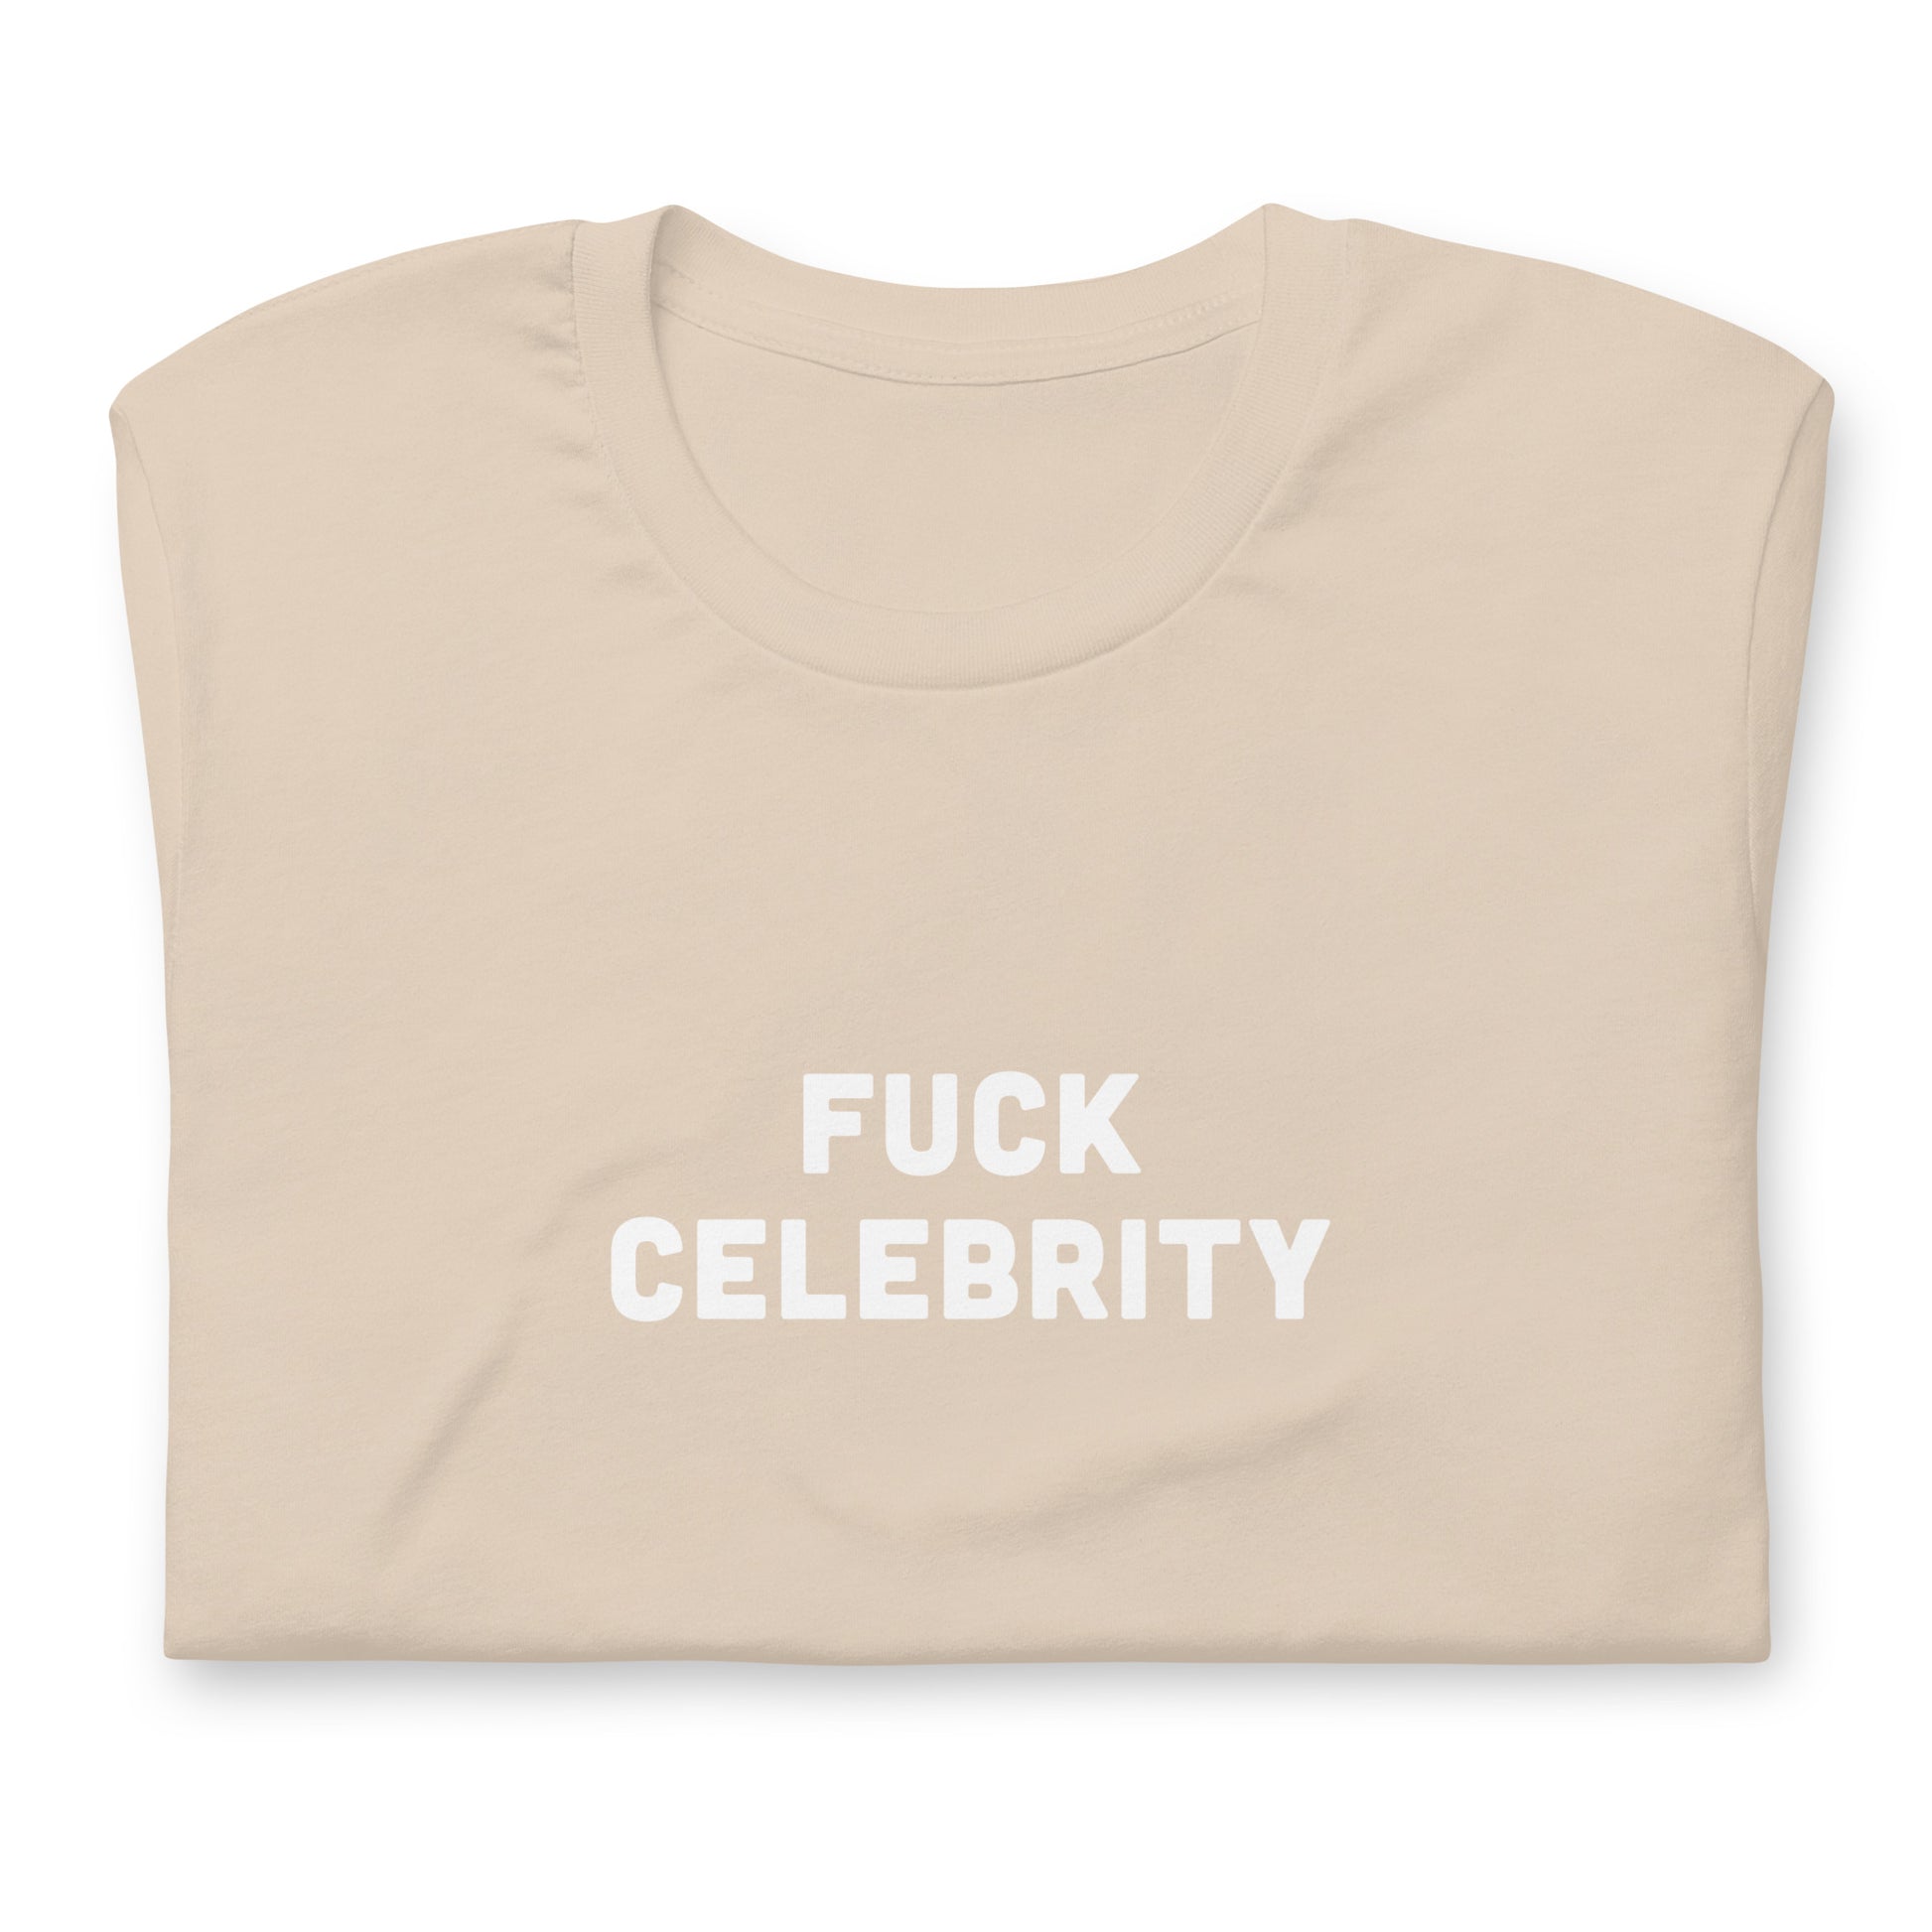 Fuck Celebrity T-Shirt Size L Color Asphalt